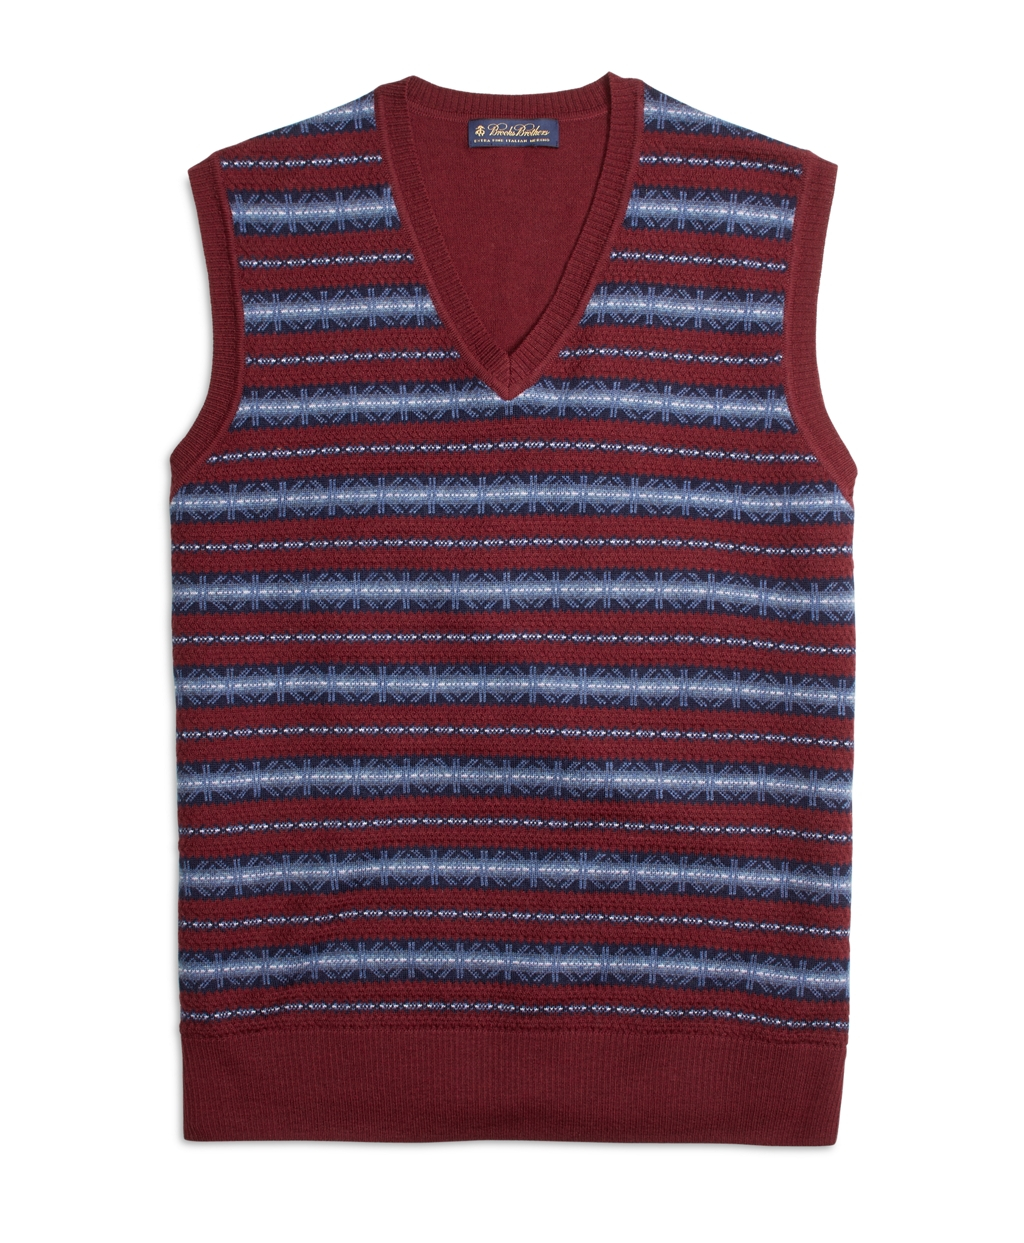 Lyst - Brooks brothers Merino Wool Fair Isle Sweater Vest for Men